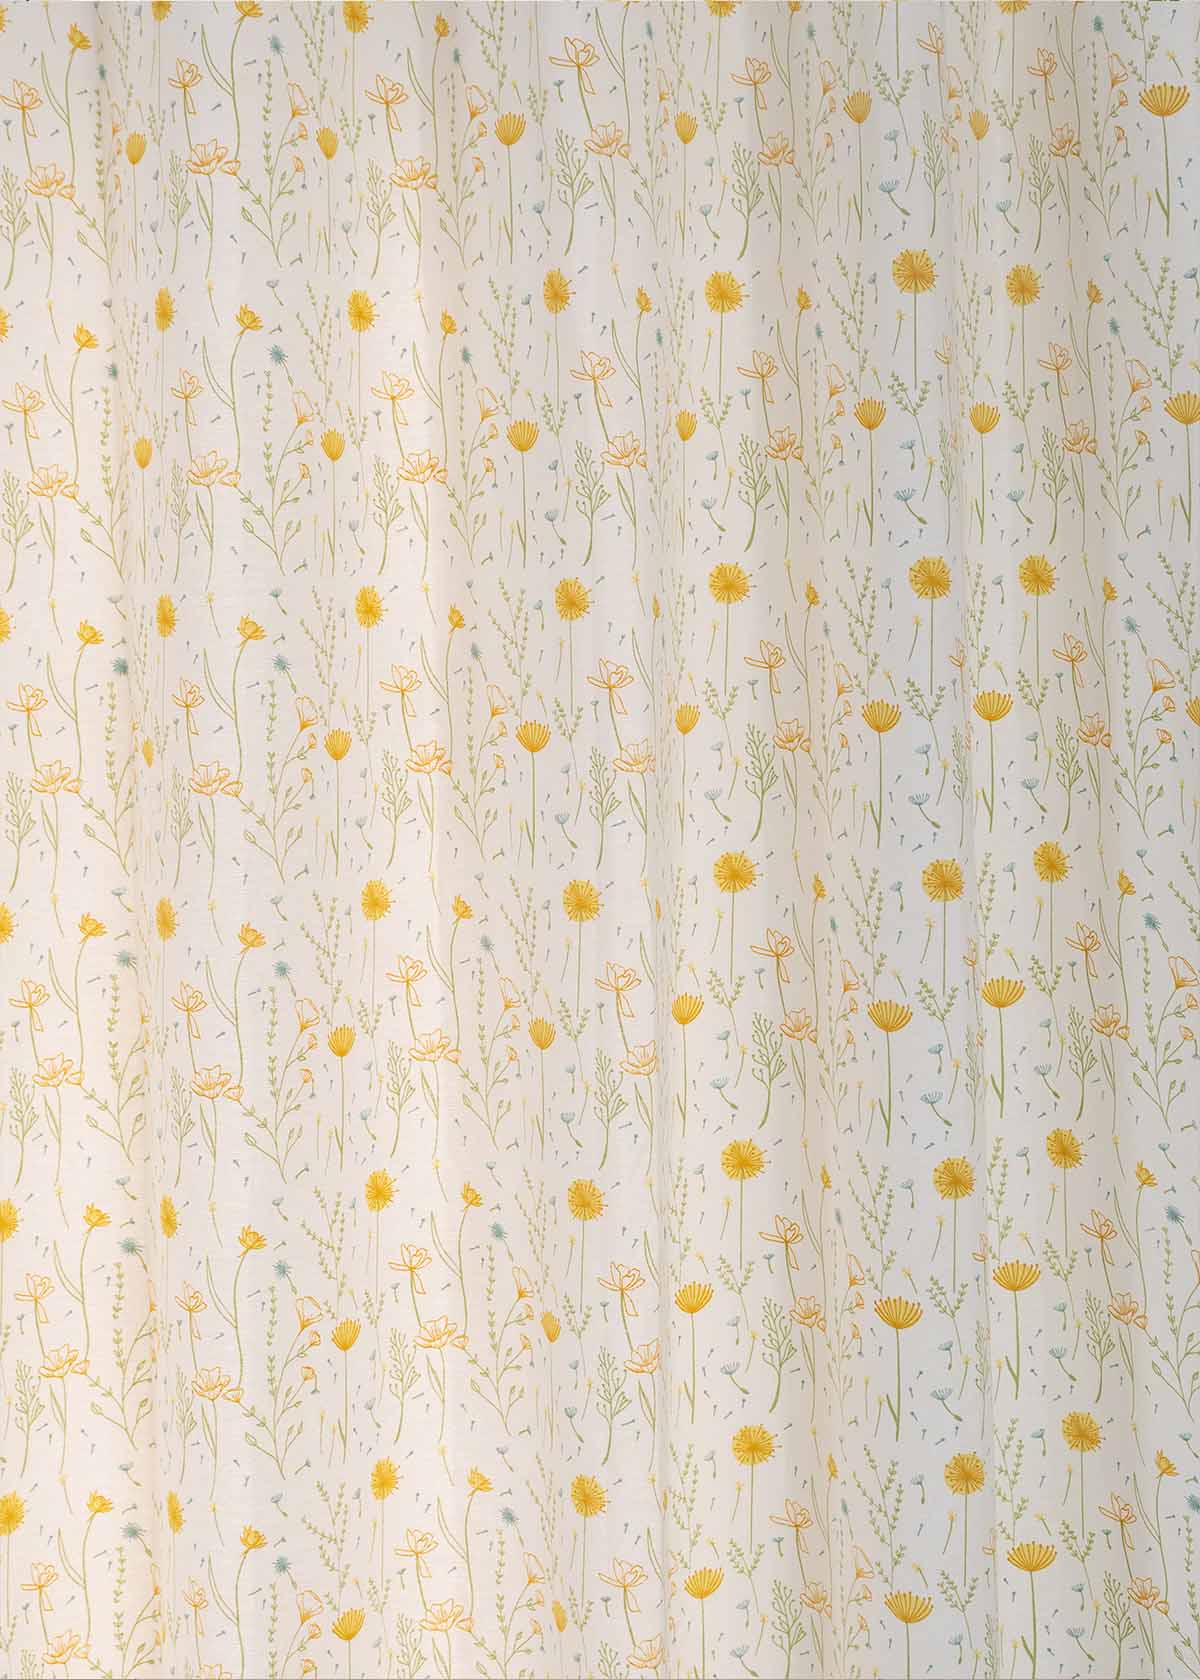 Drifting dandelion printed cotton Fabric - Yellow